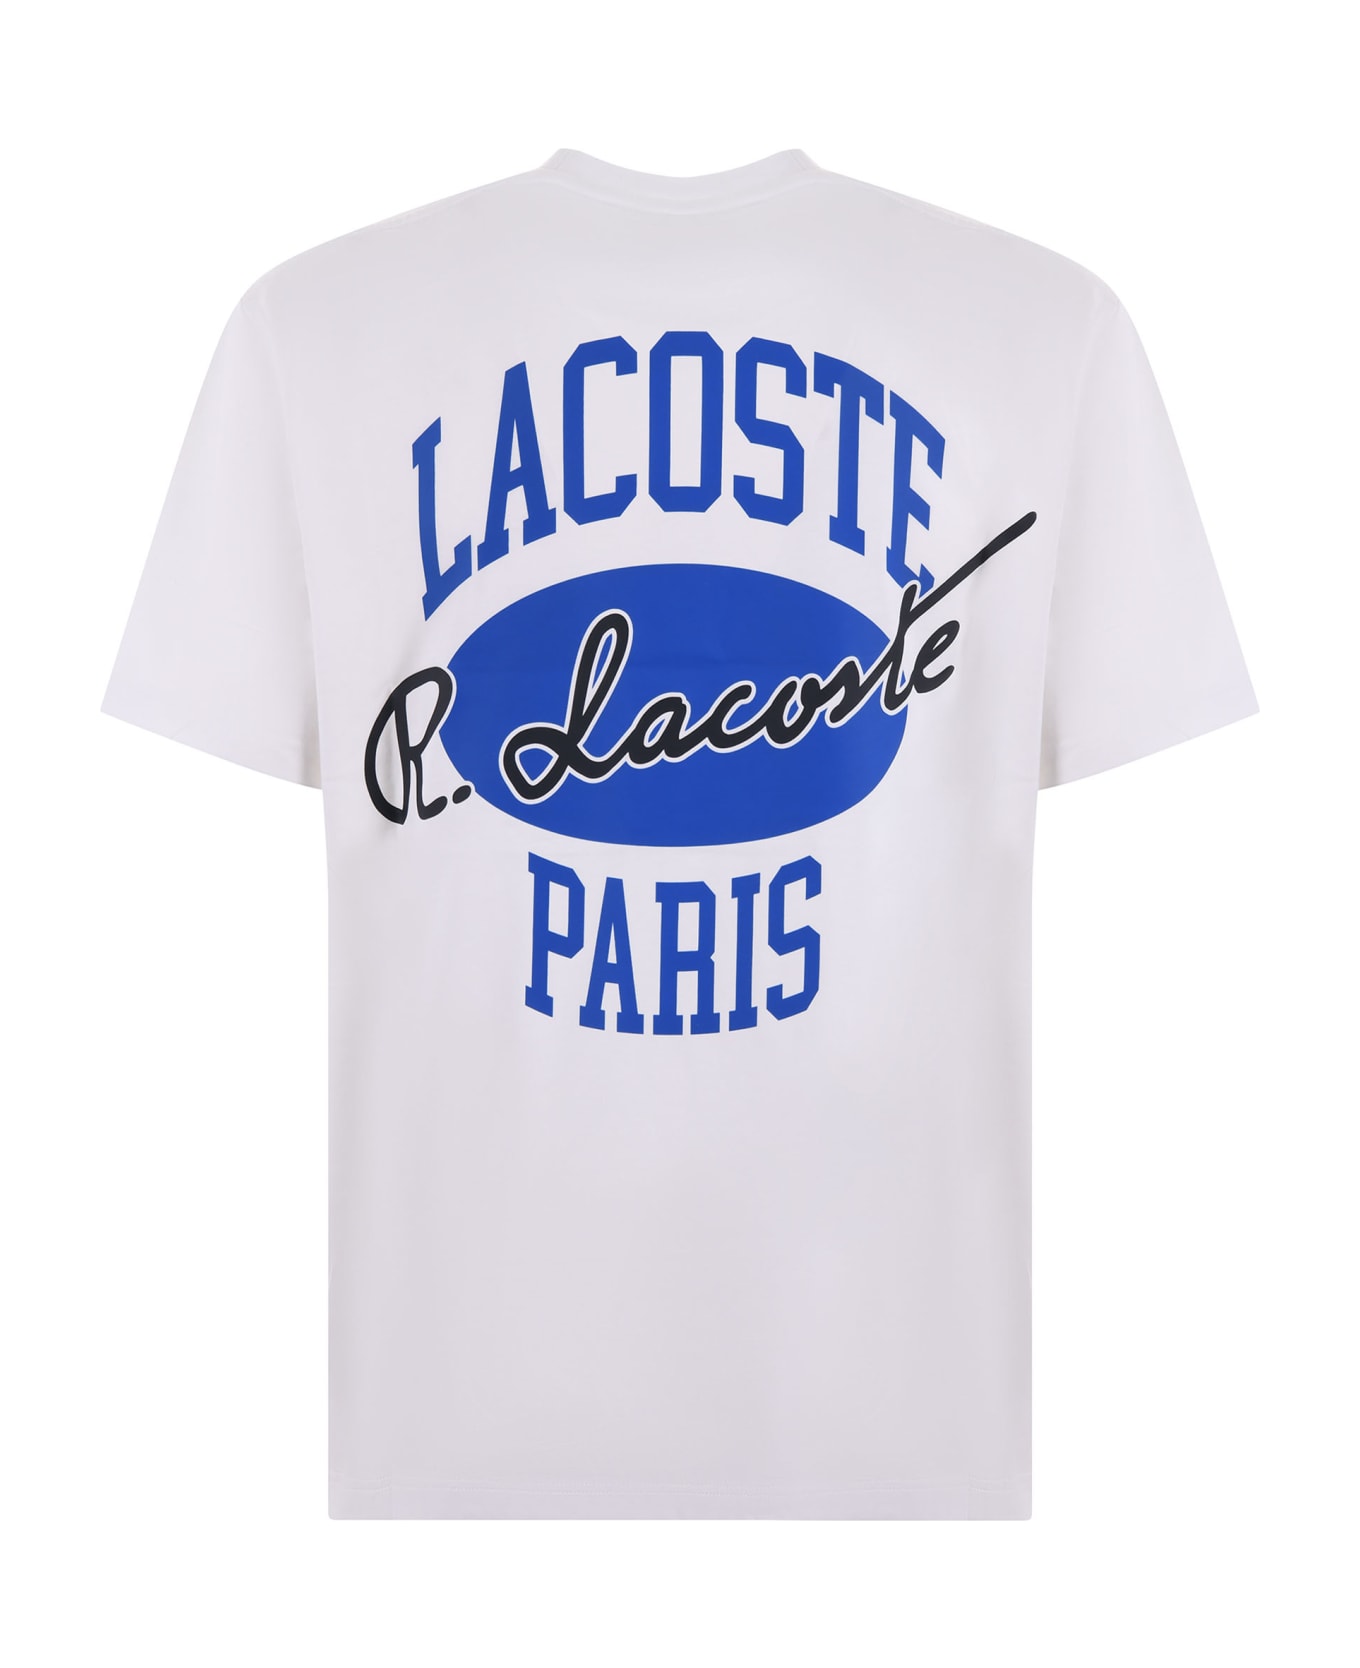 Lacoste T-shirt - Bianco